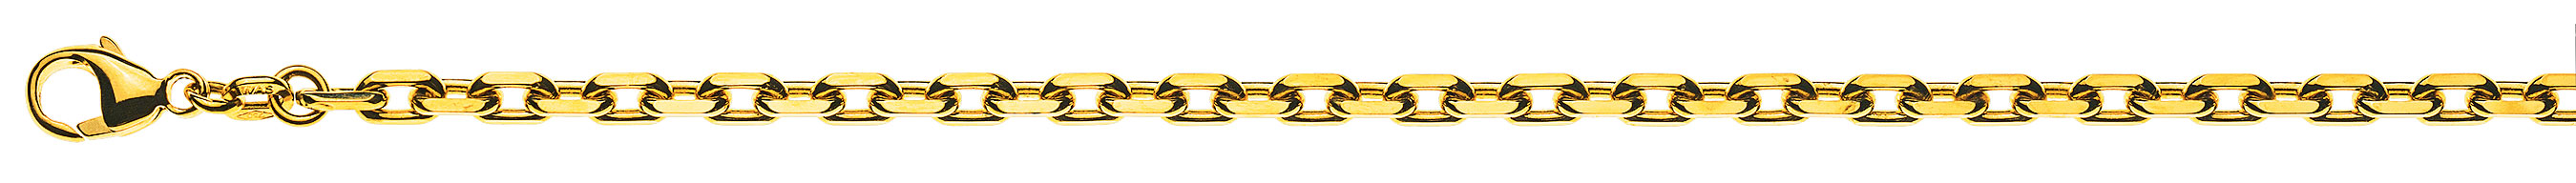 AURONOS Prestige Necklace yellow gold 18K anchor 4-ply 50cm 3.5mm